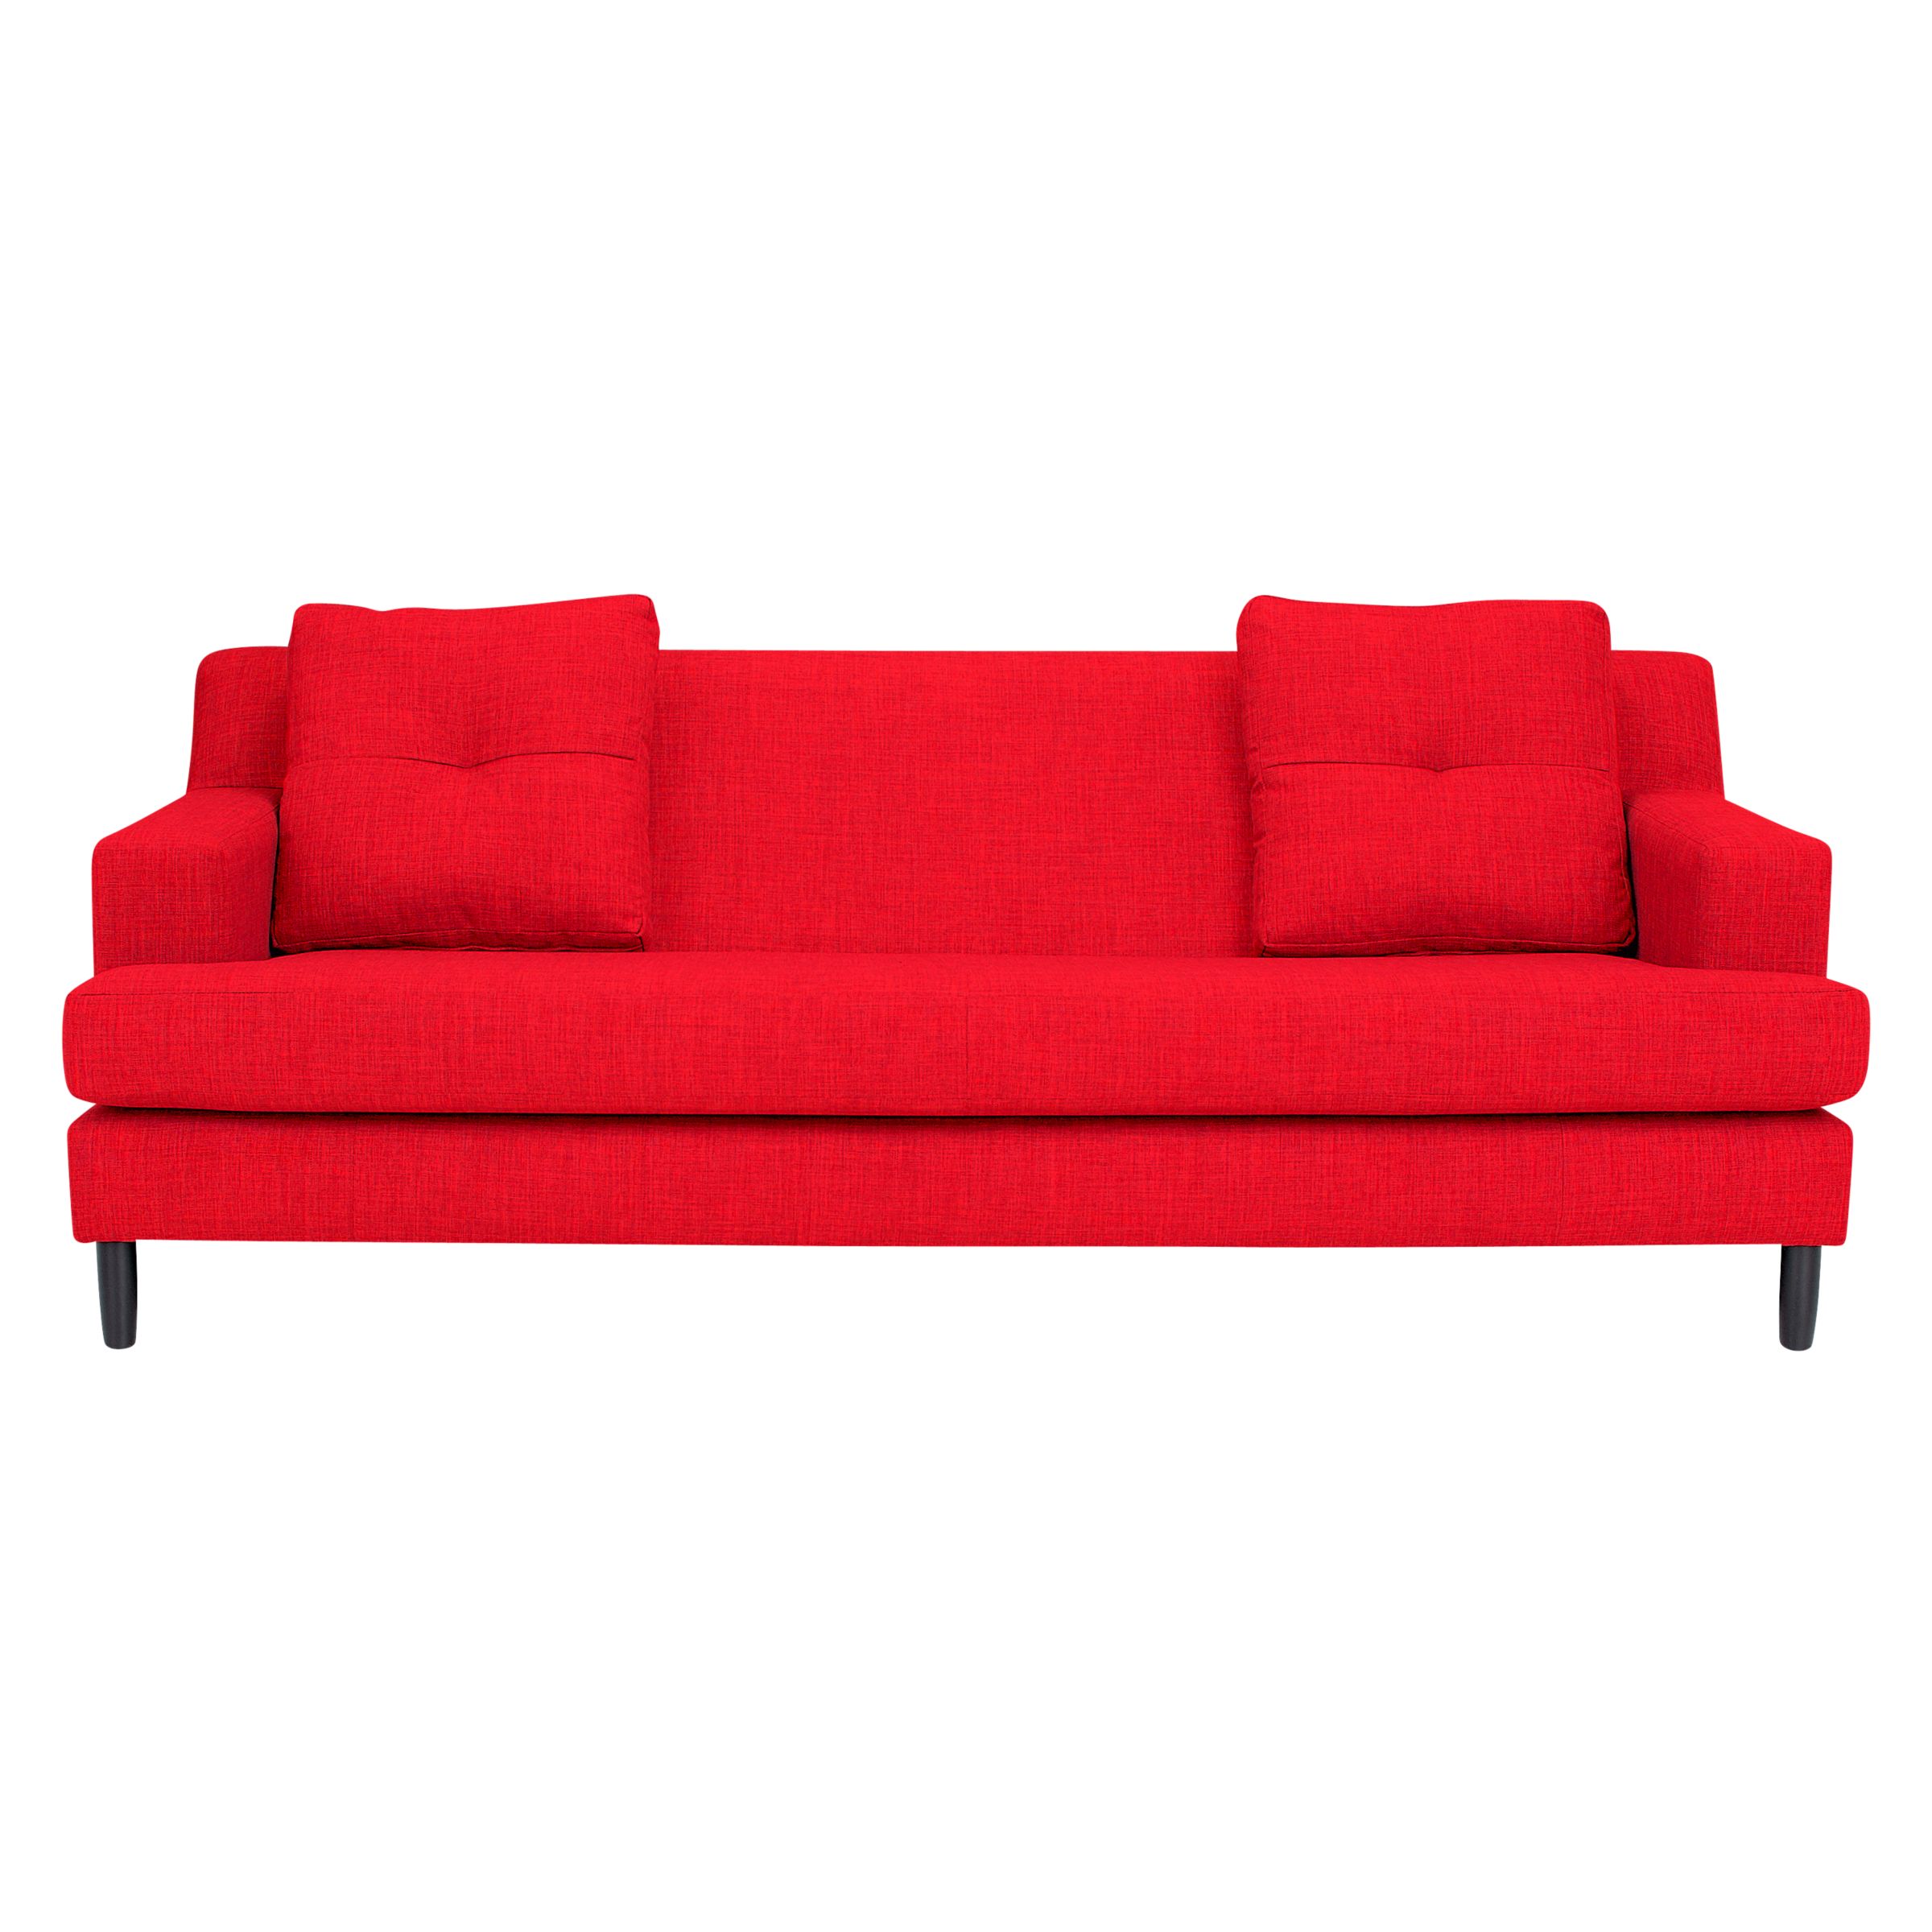 House by John Lewis Alex Large Sofa, Red / Dark Leg, width 195cm